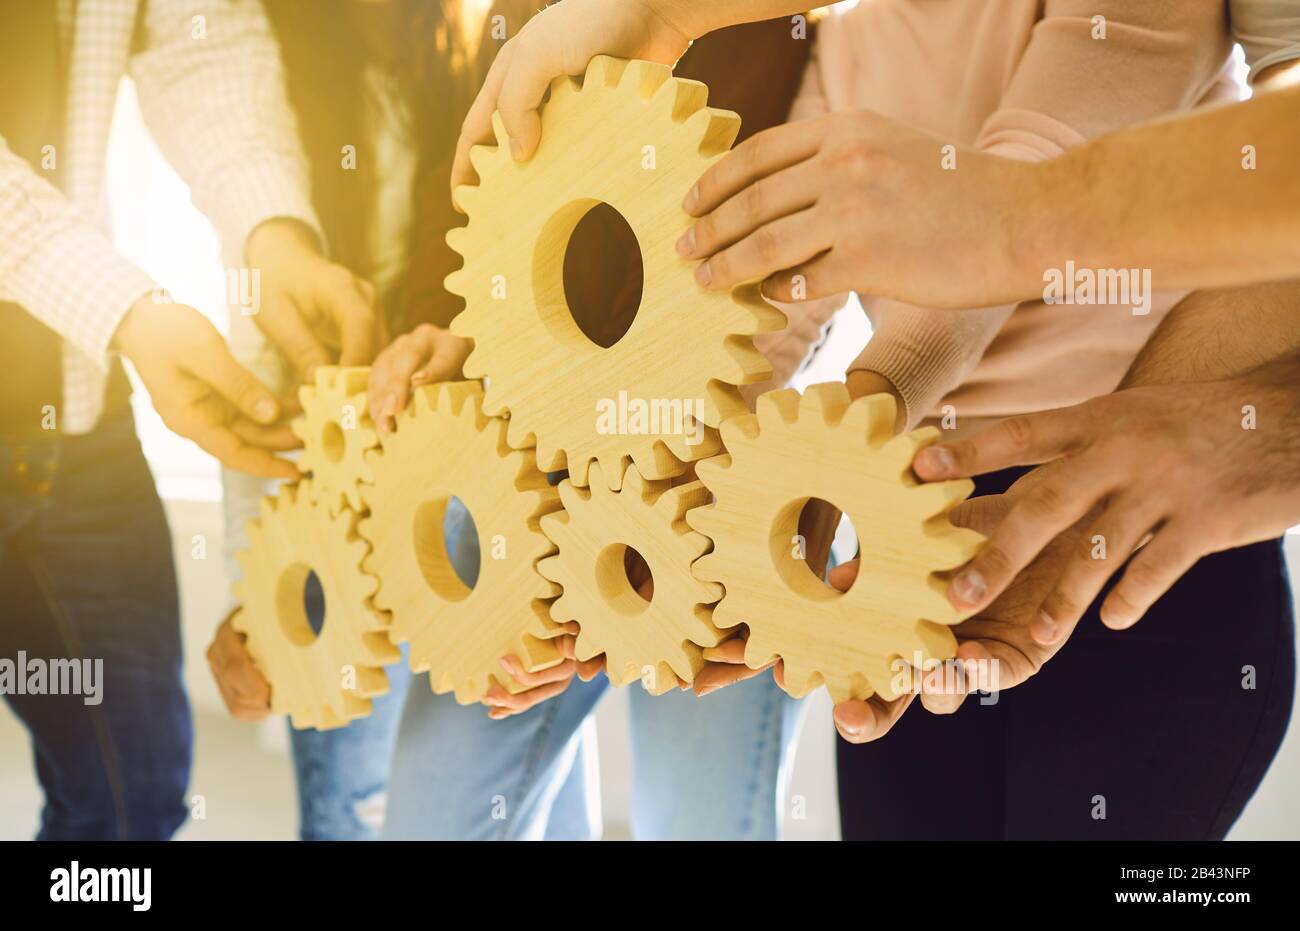 Concept business team communicate innovation strategy integration university teamwork contract integration. Stock Photo